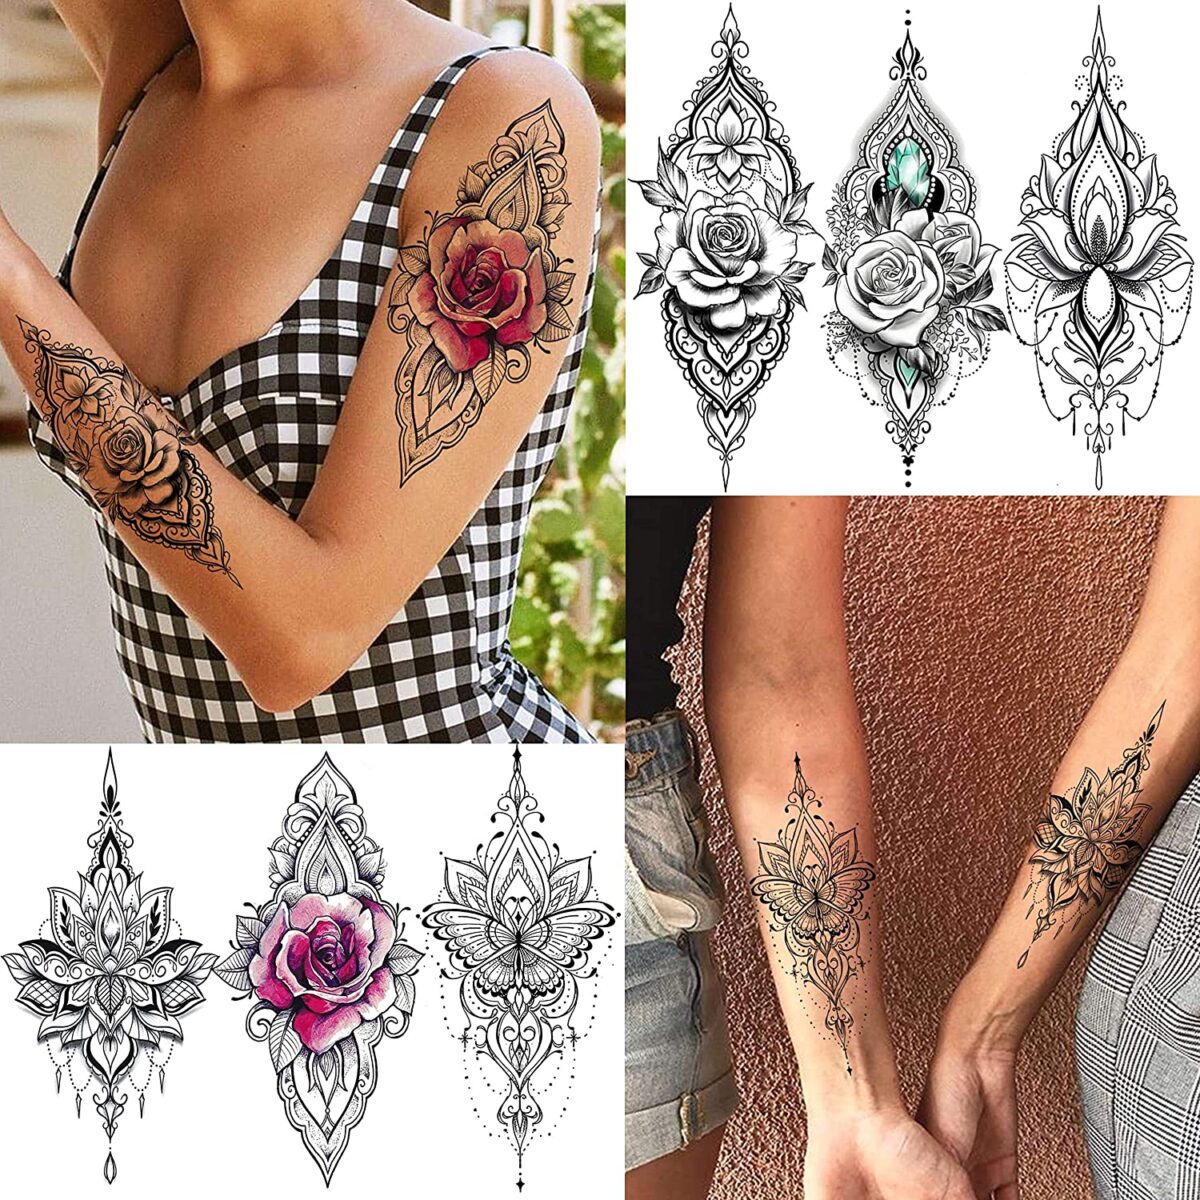 TASROI 32 Sheets Sexy Black Henna Temporary Tattoos For Women Girls